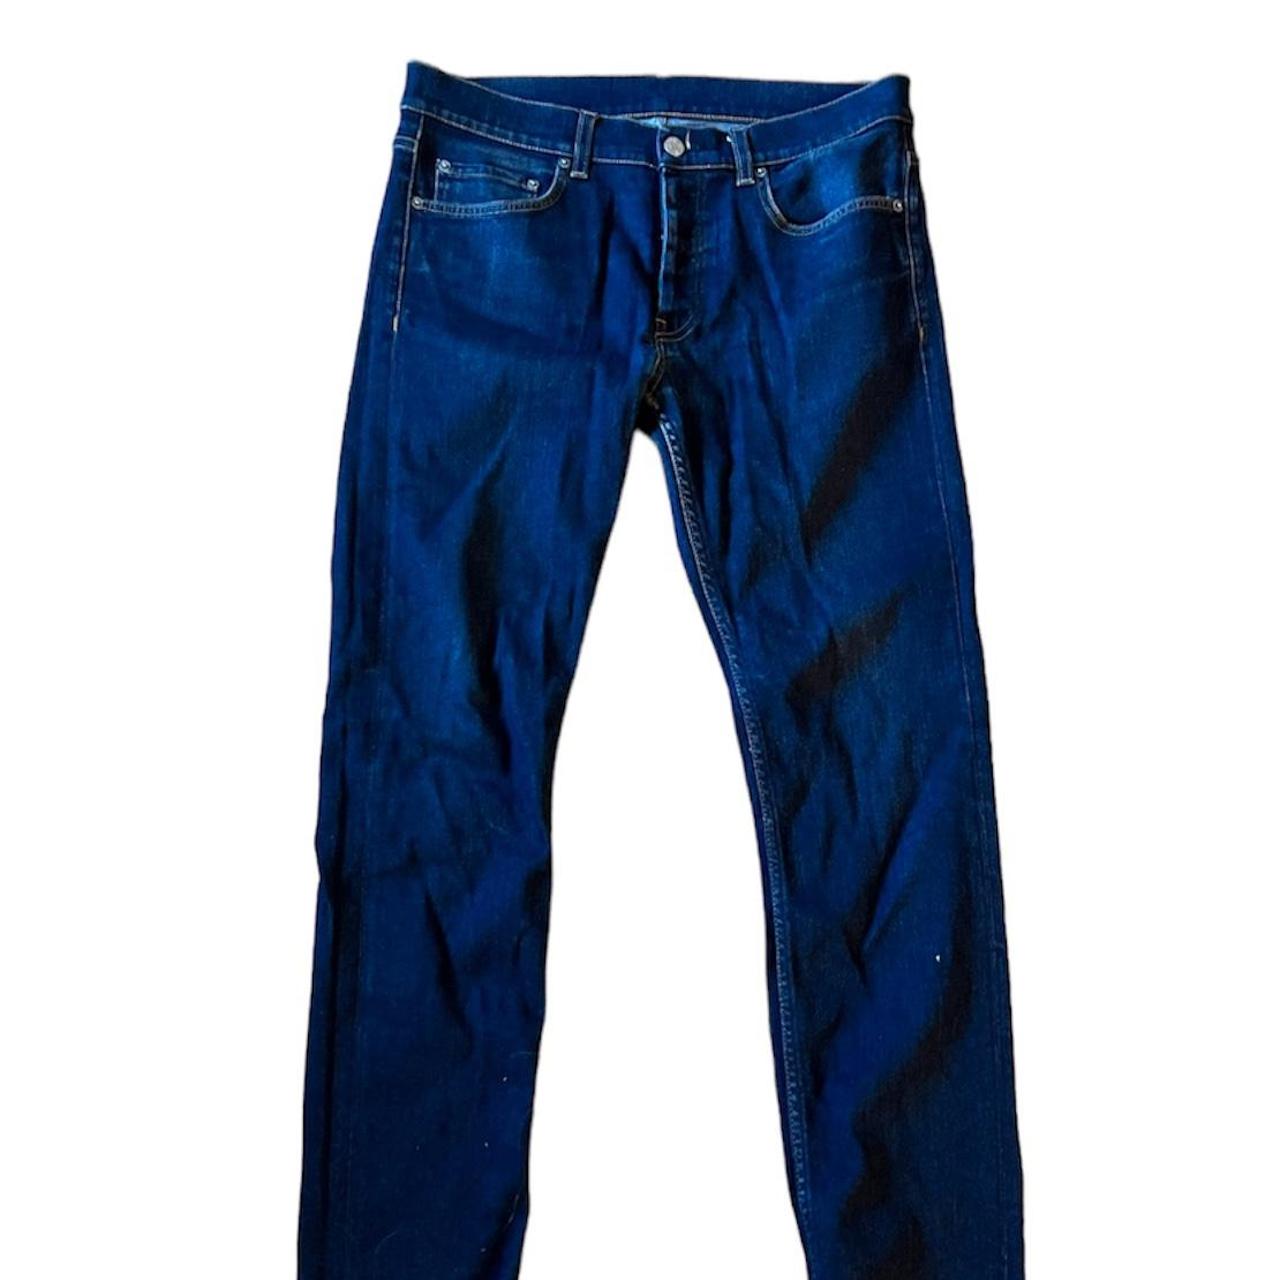 Vintage (early 2000s) Helmut Lang Jean set. Jeans